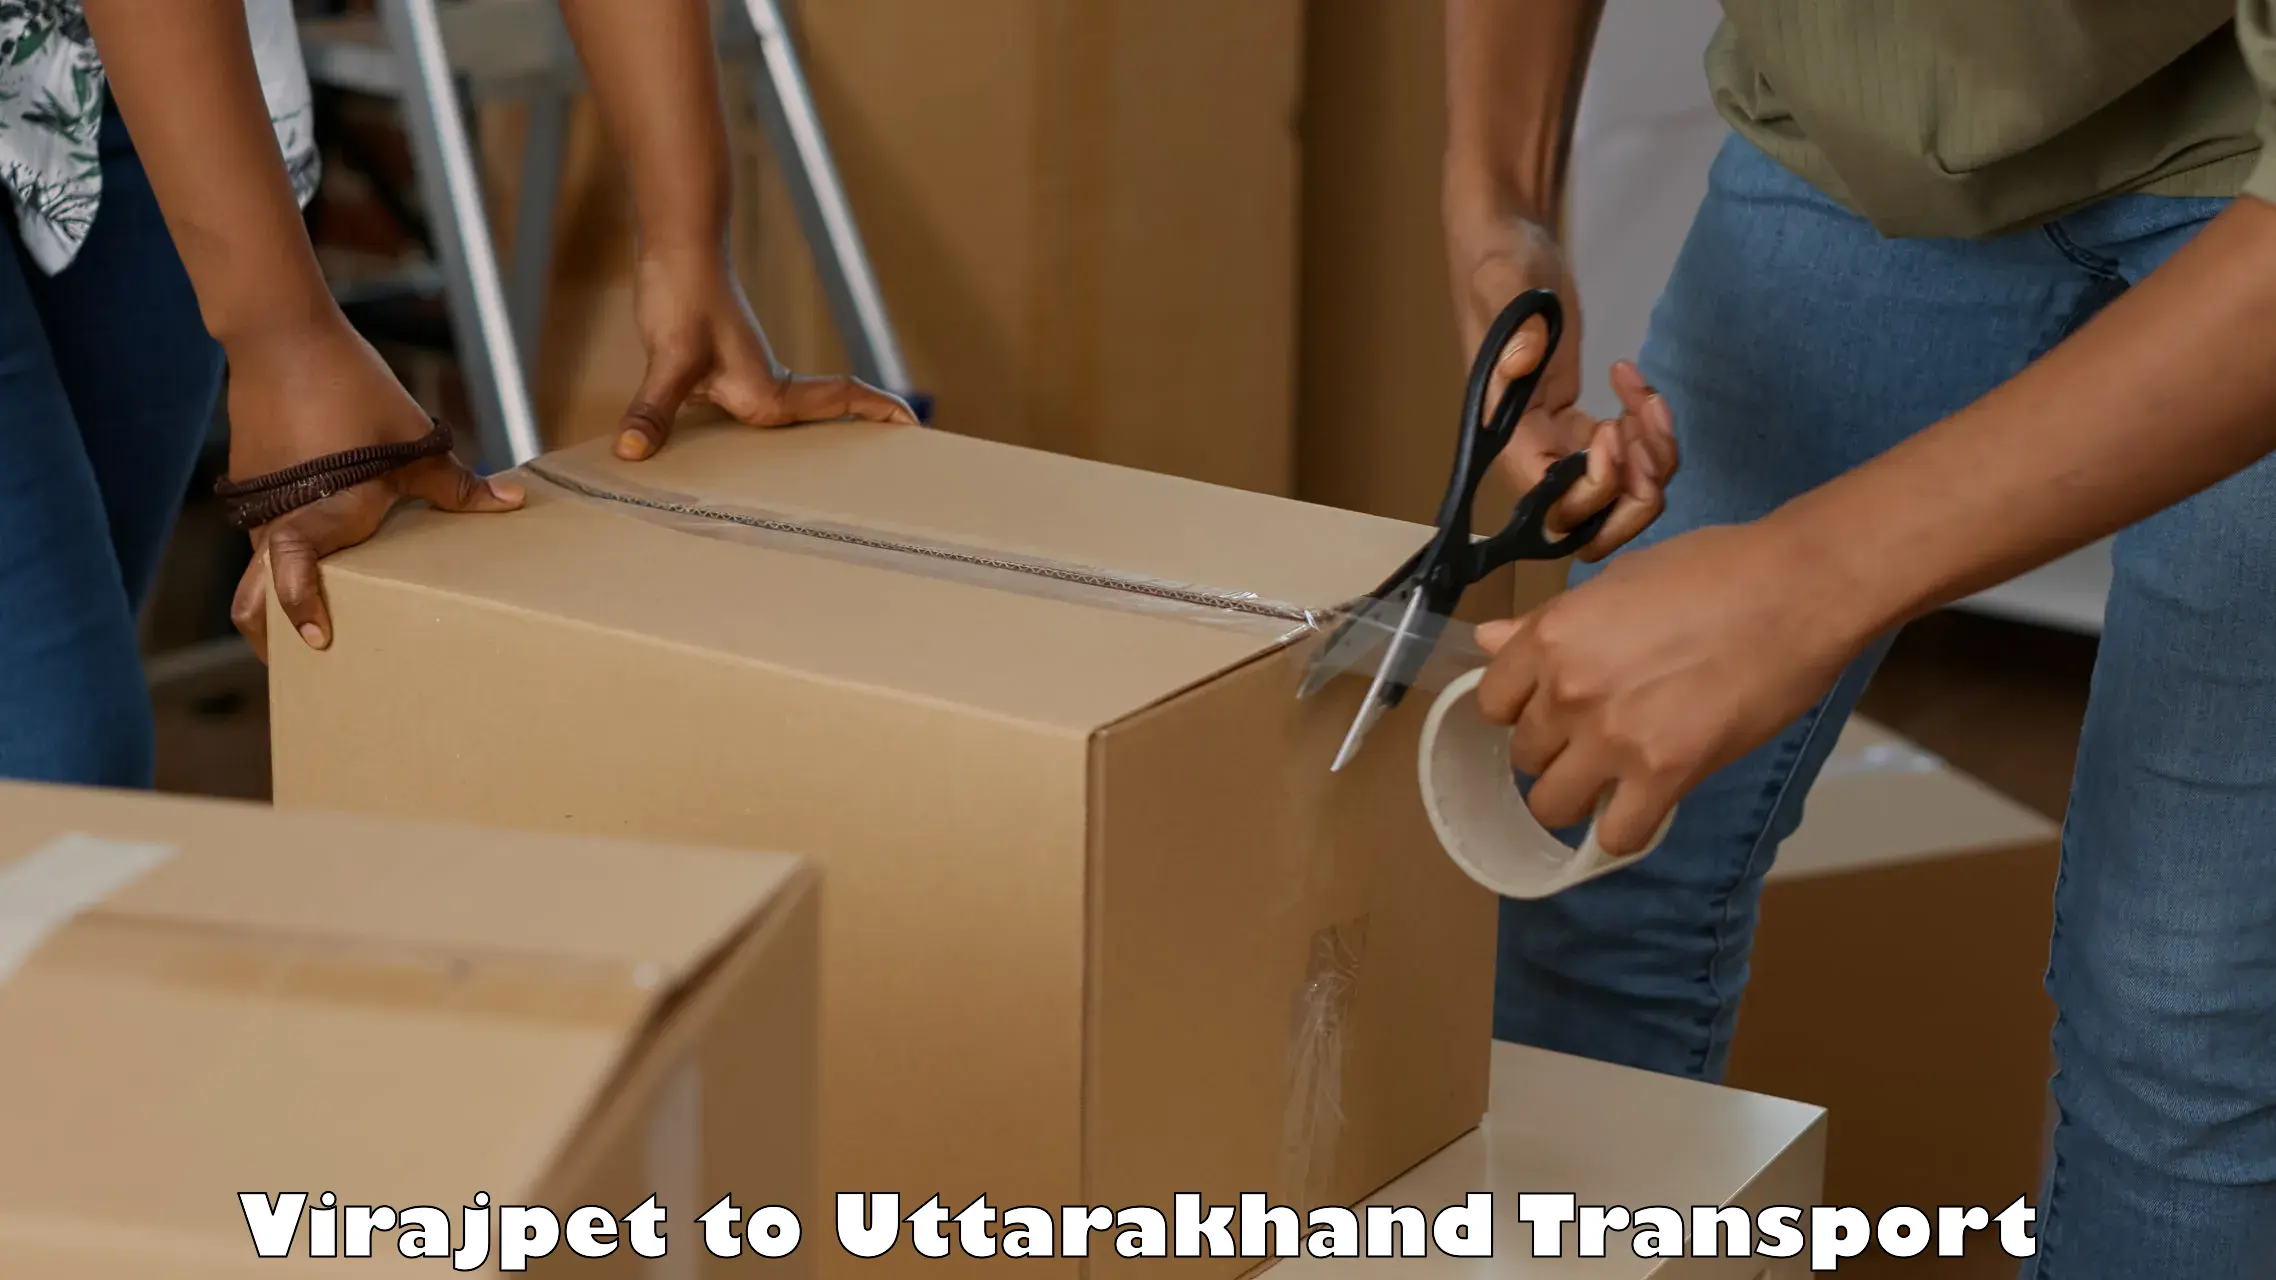 Goods delivery service Virajpet to Uttarakhand